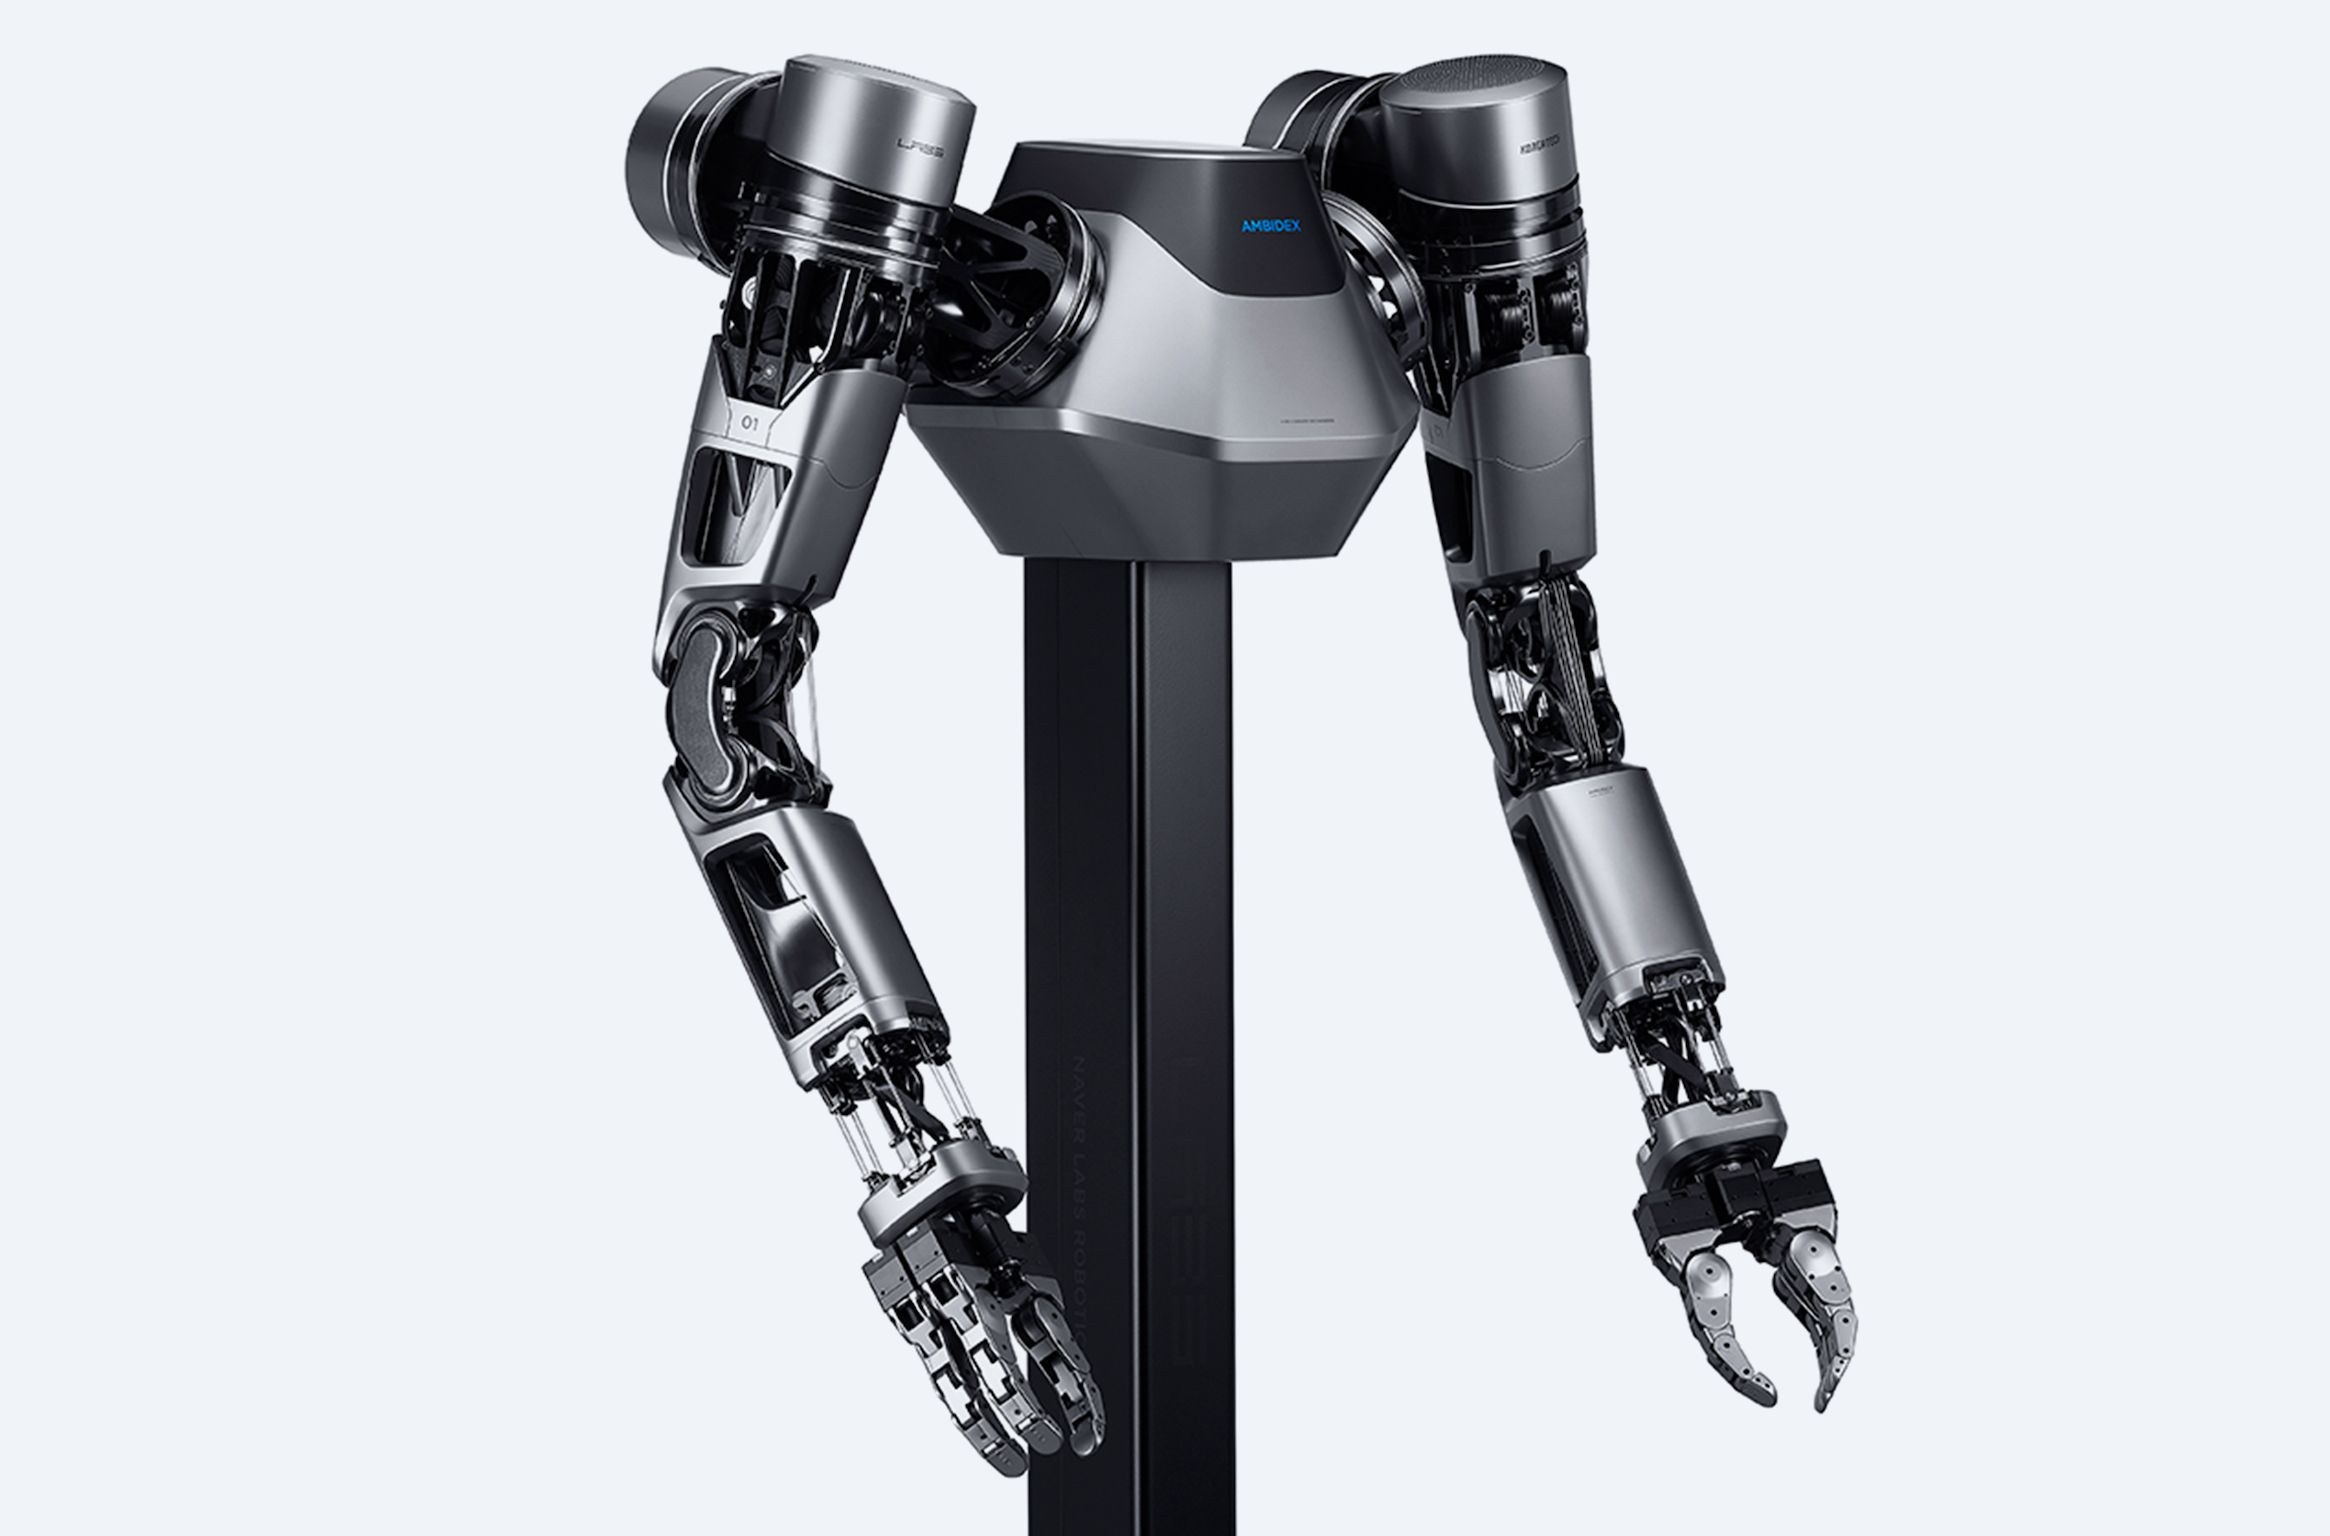 Honor r2 rob 01. Робот xm1219 Armed Robotic vehicle. Waveshare робот Пимнара металлический робот. Роборука манипулятор. Рука робота.